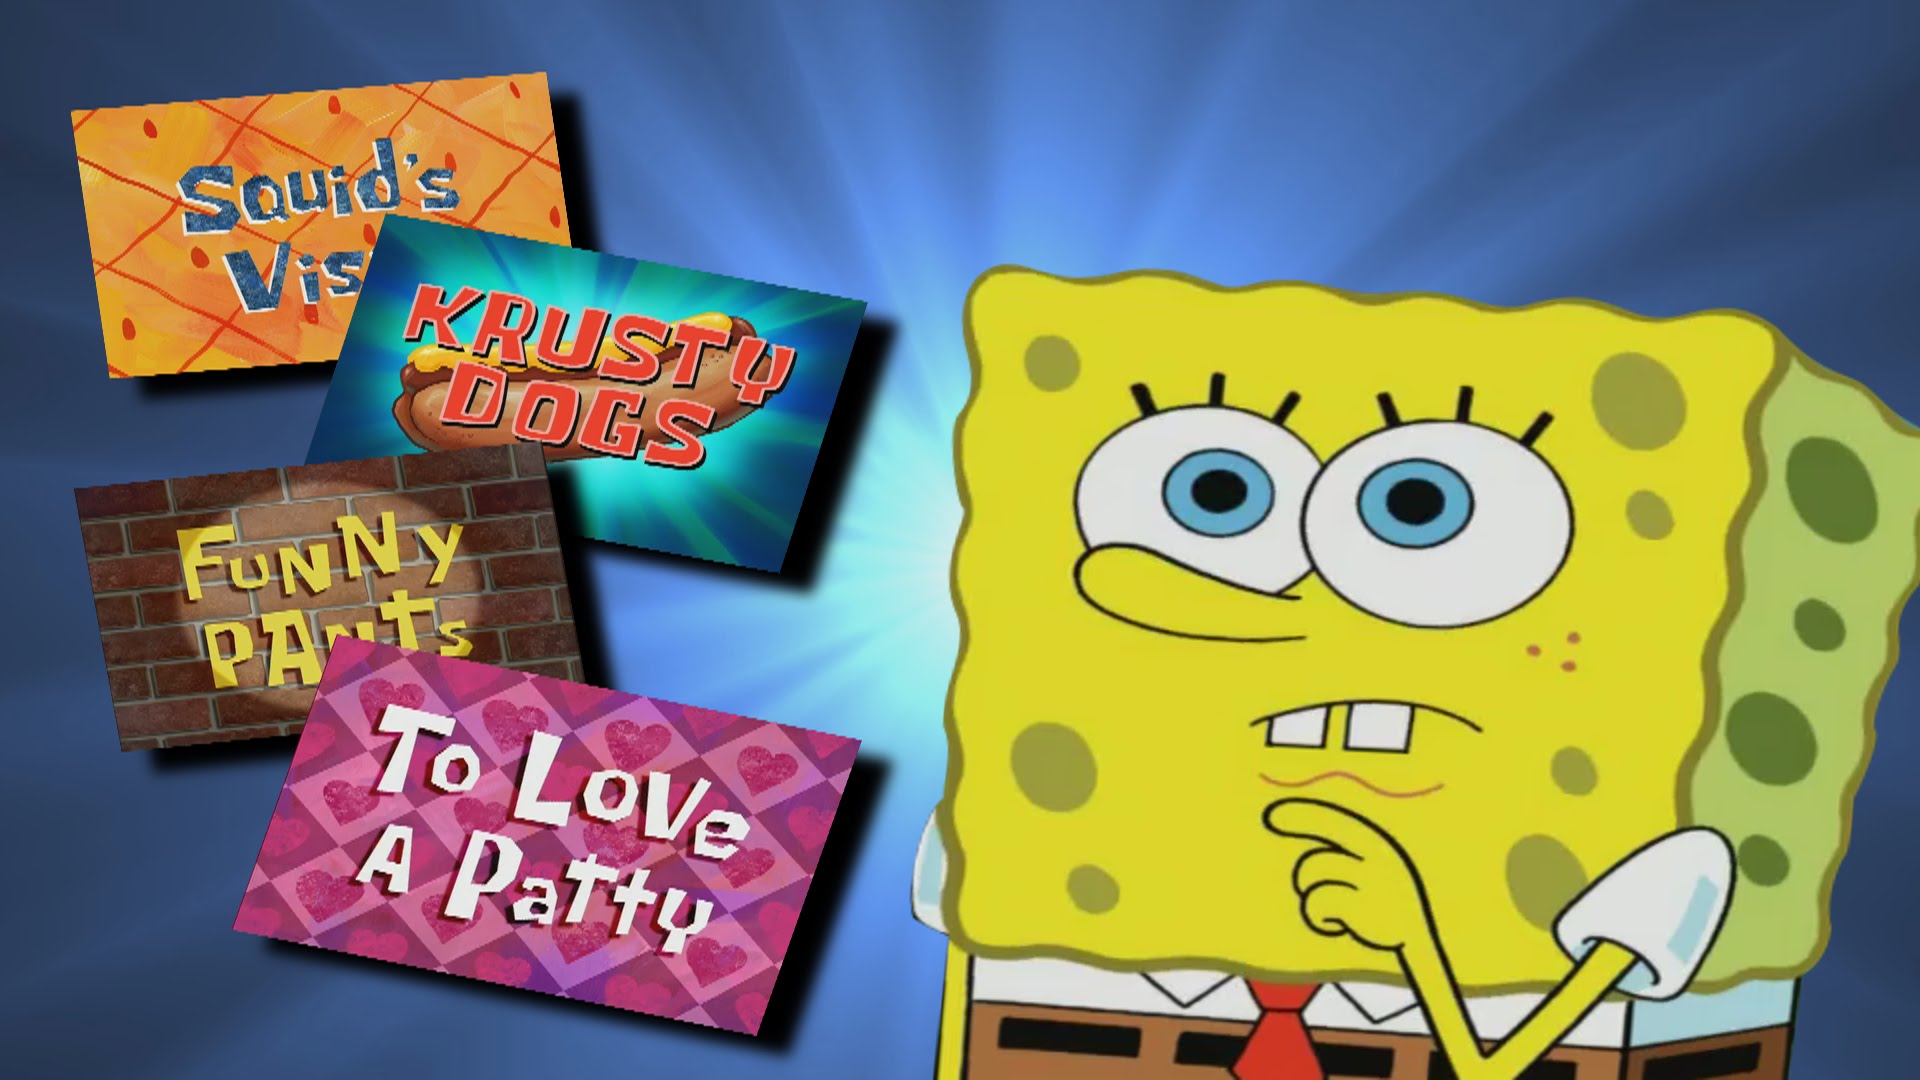 Spongebob Squarepants Download Episodes